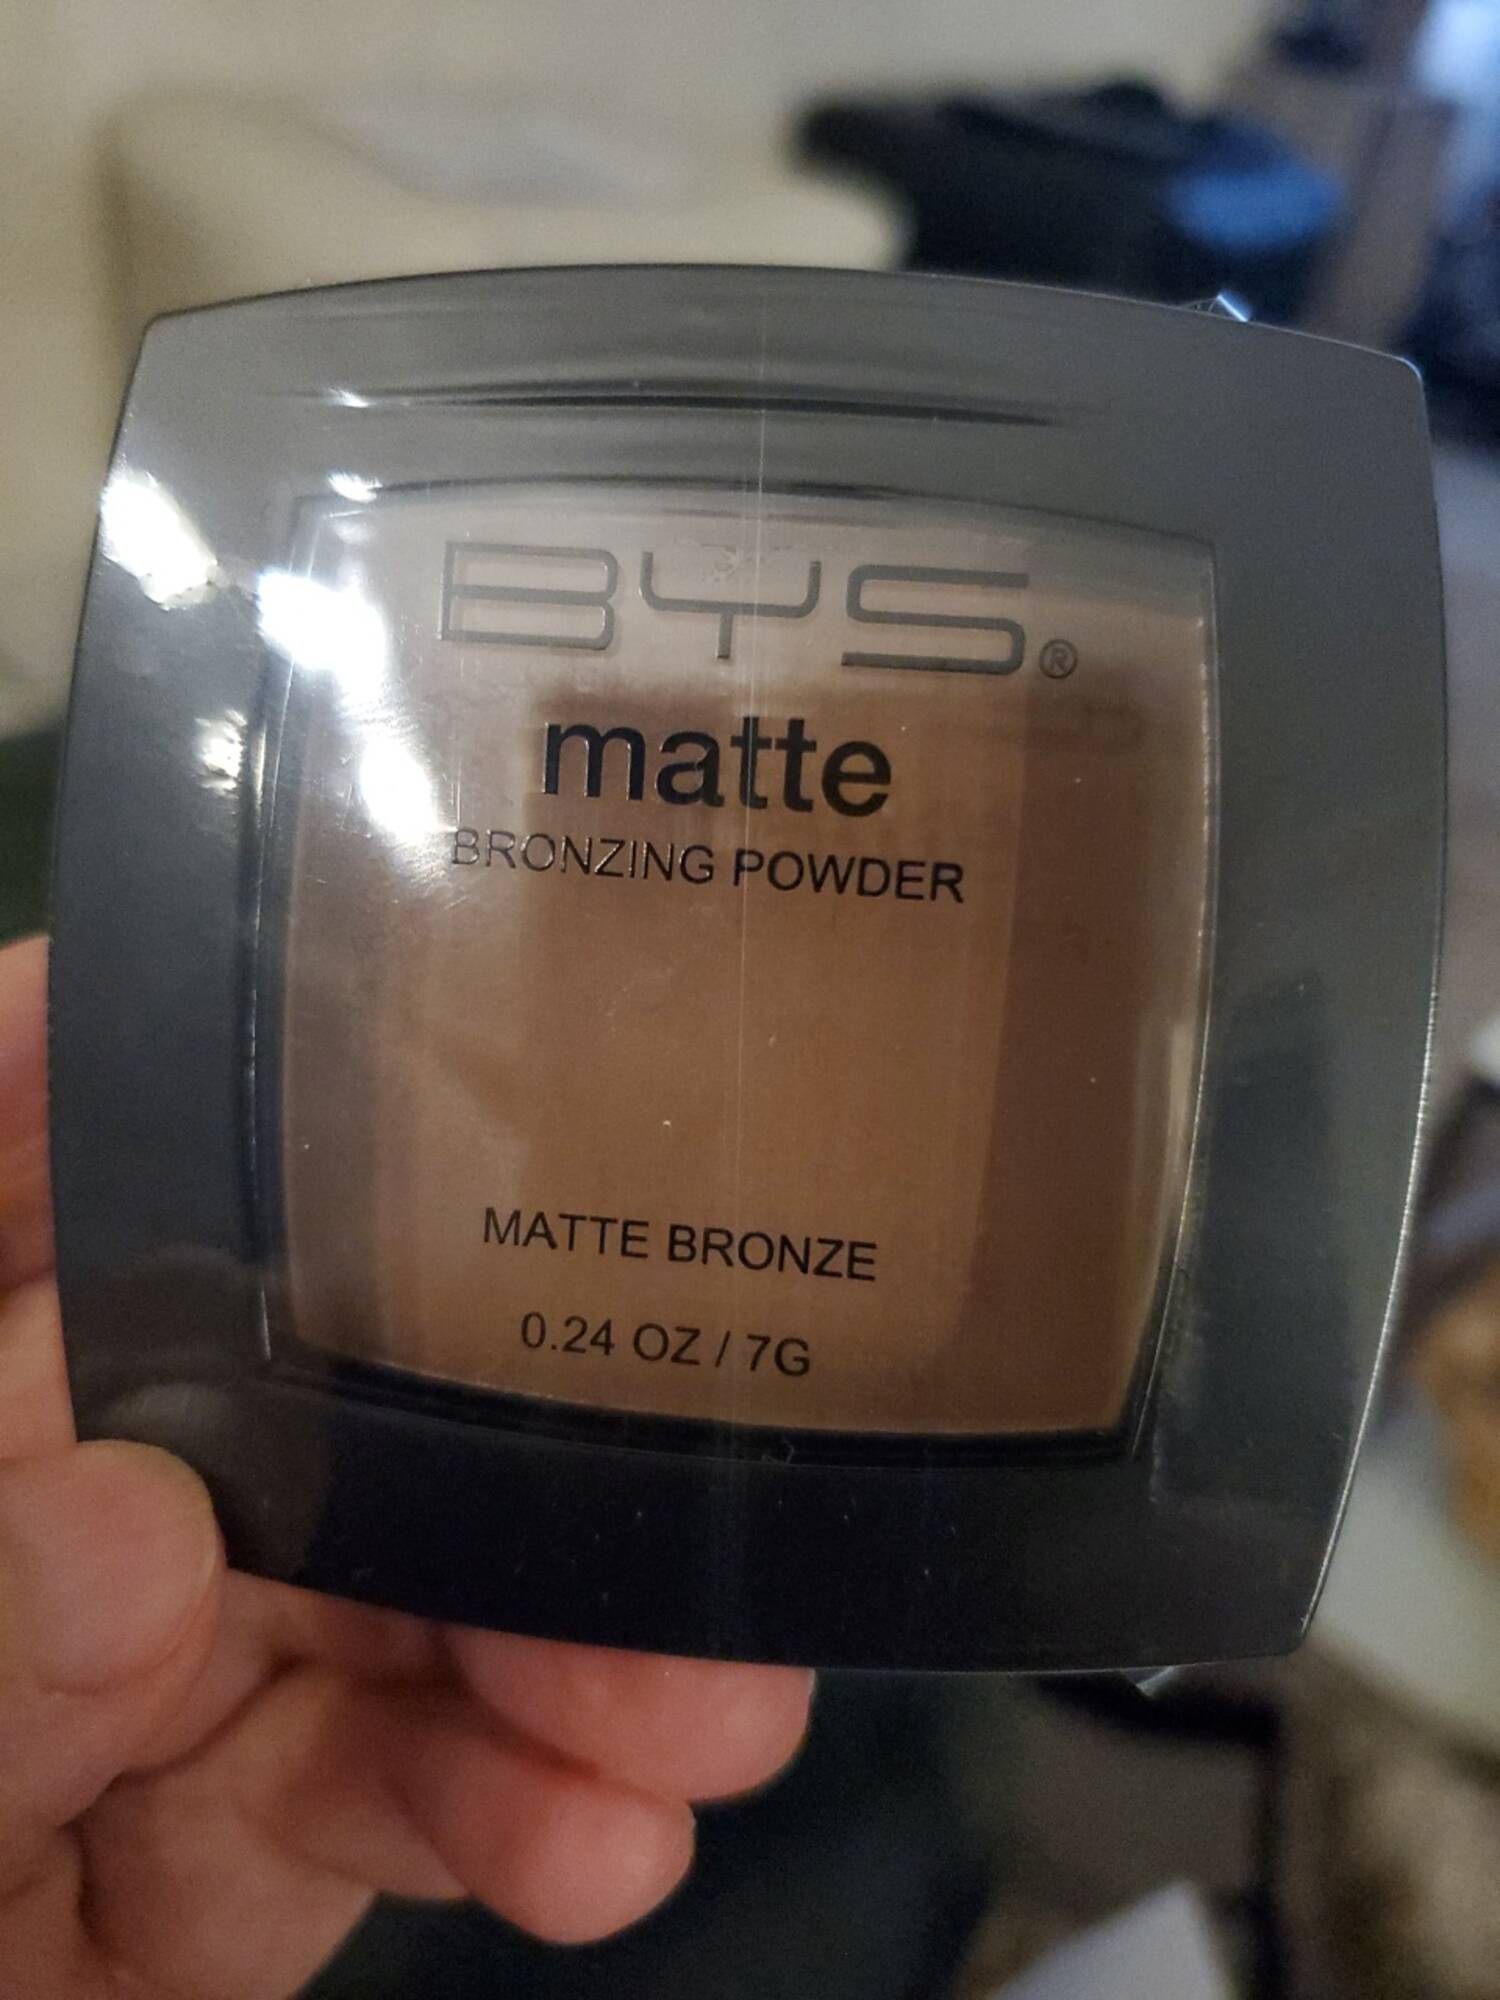 BYS - Matte bronzing powder